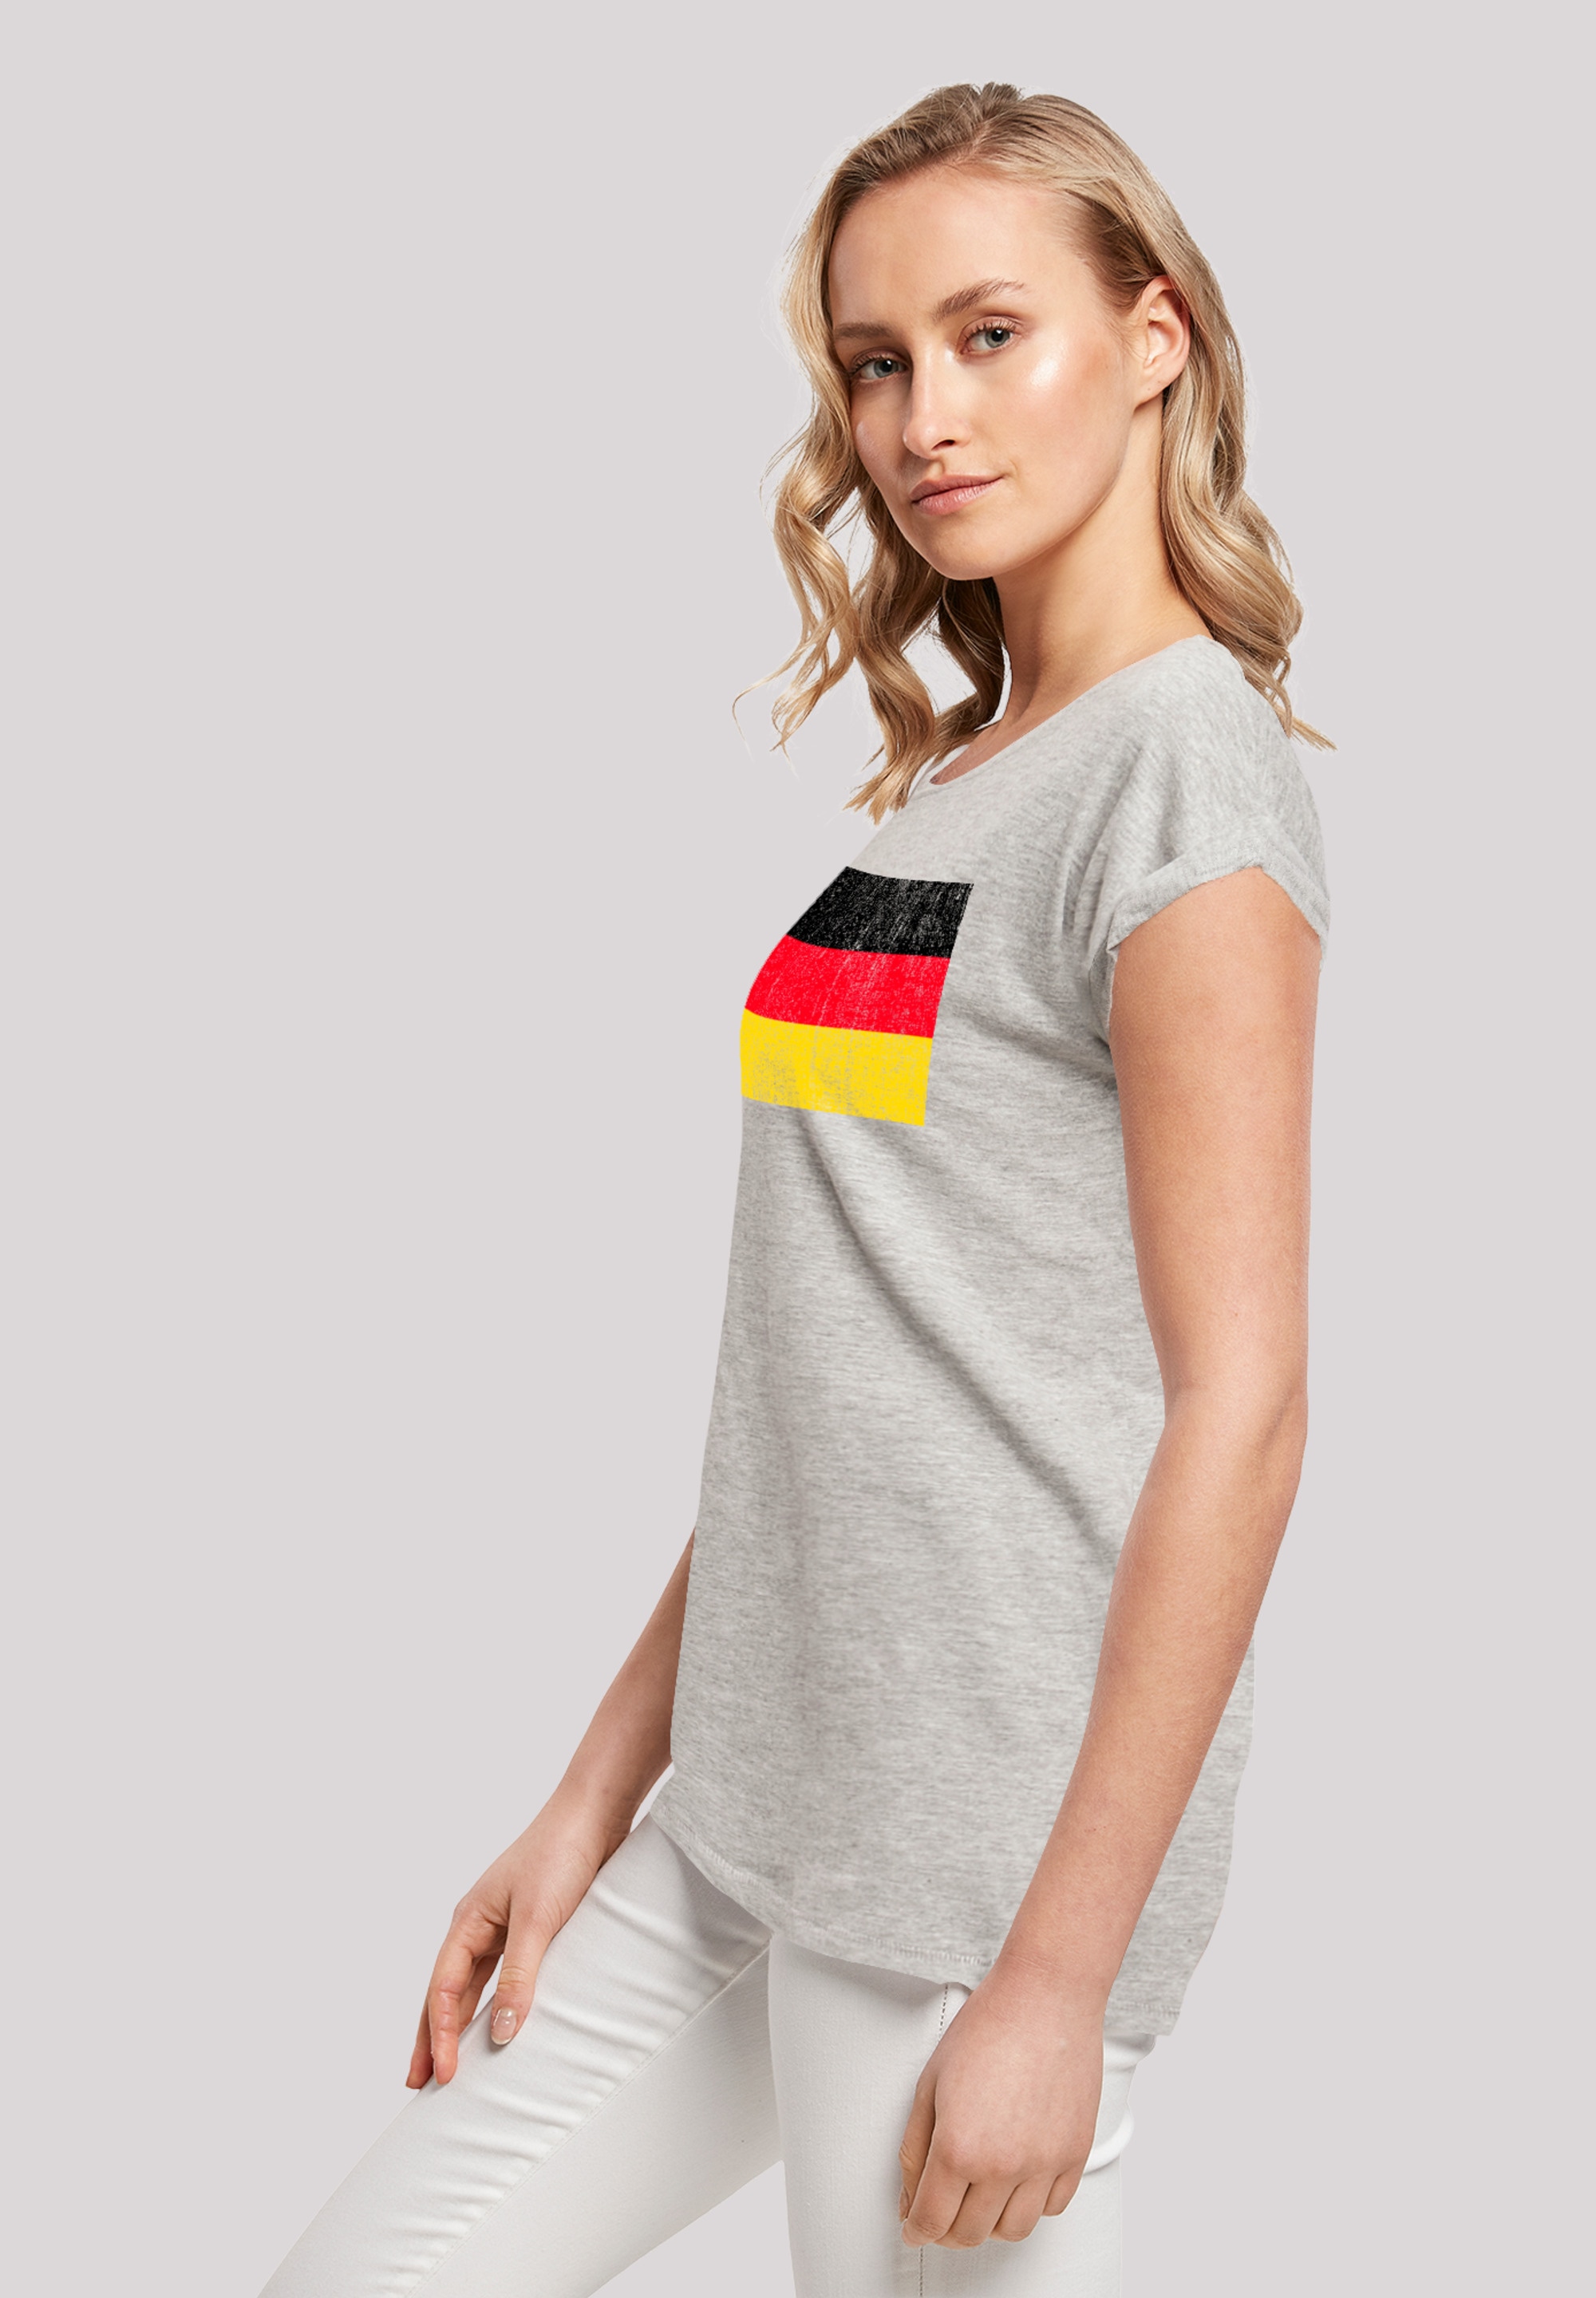 F4NT4STIC Flagge Print Deutschland »Germany kaufen distressed«, T-Shirt